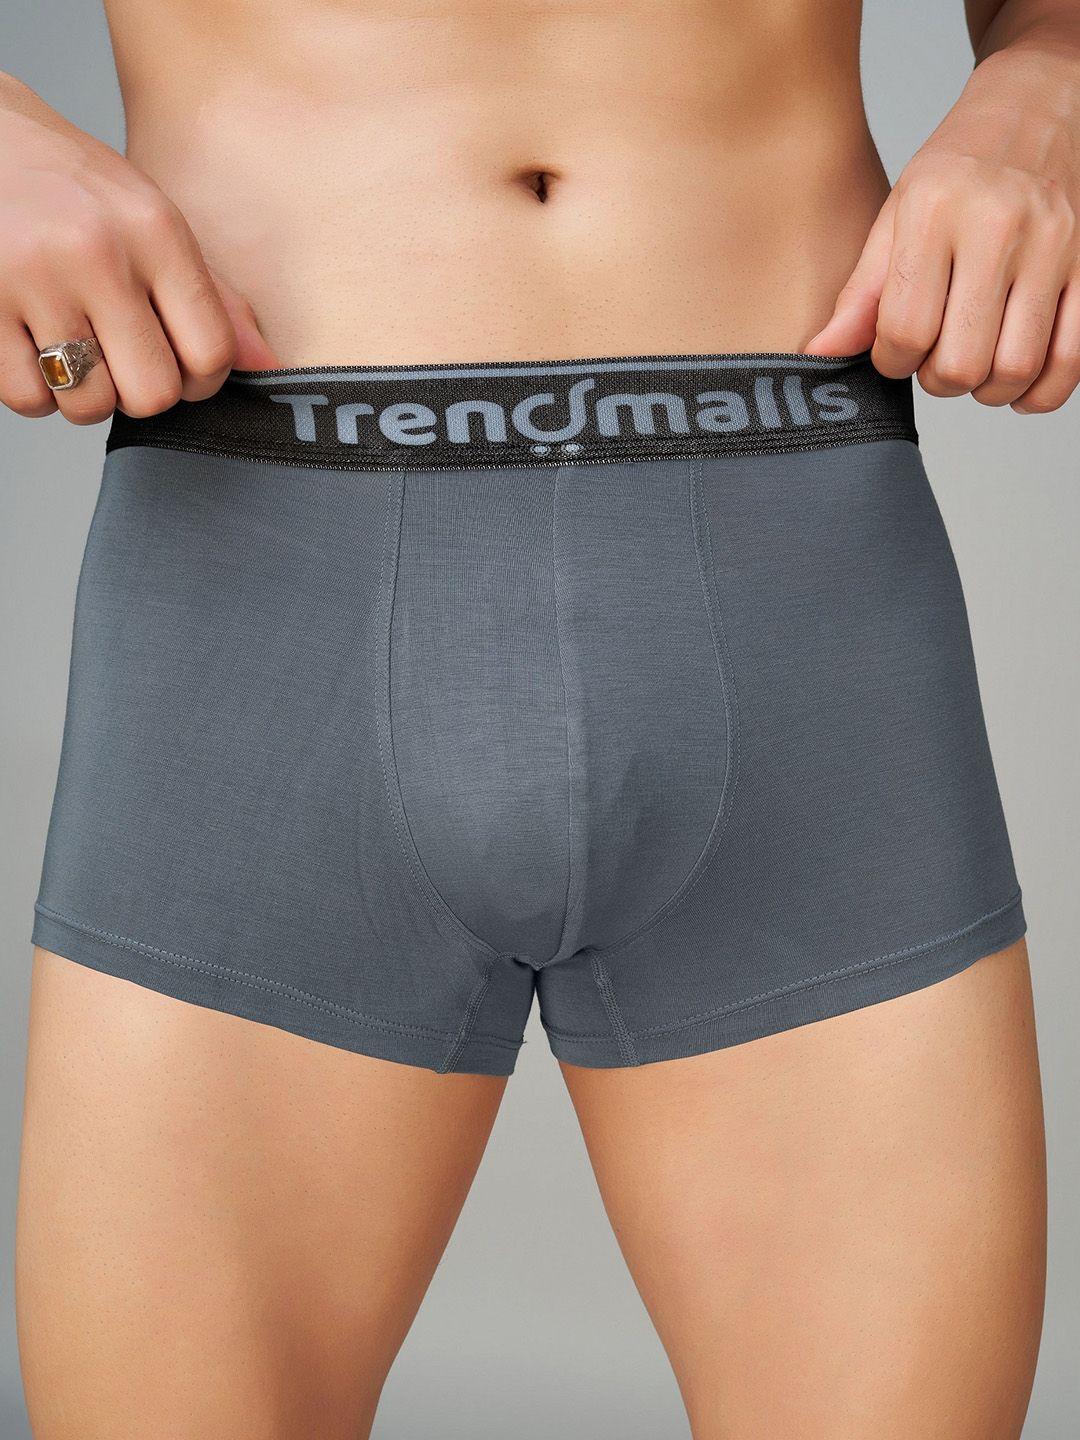 trendmalls men mid-rise sweat-wicking trunk tm-mu02-grey-s